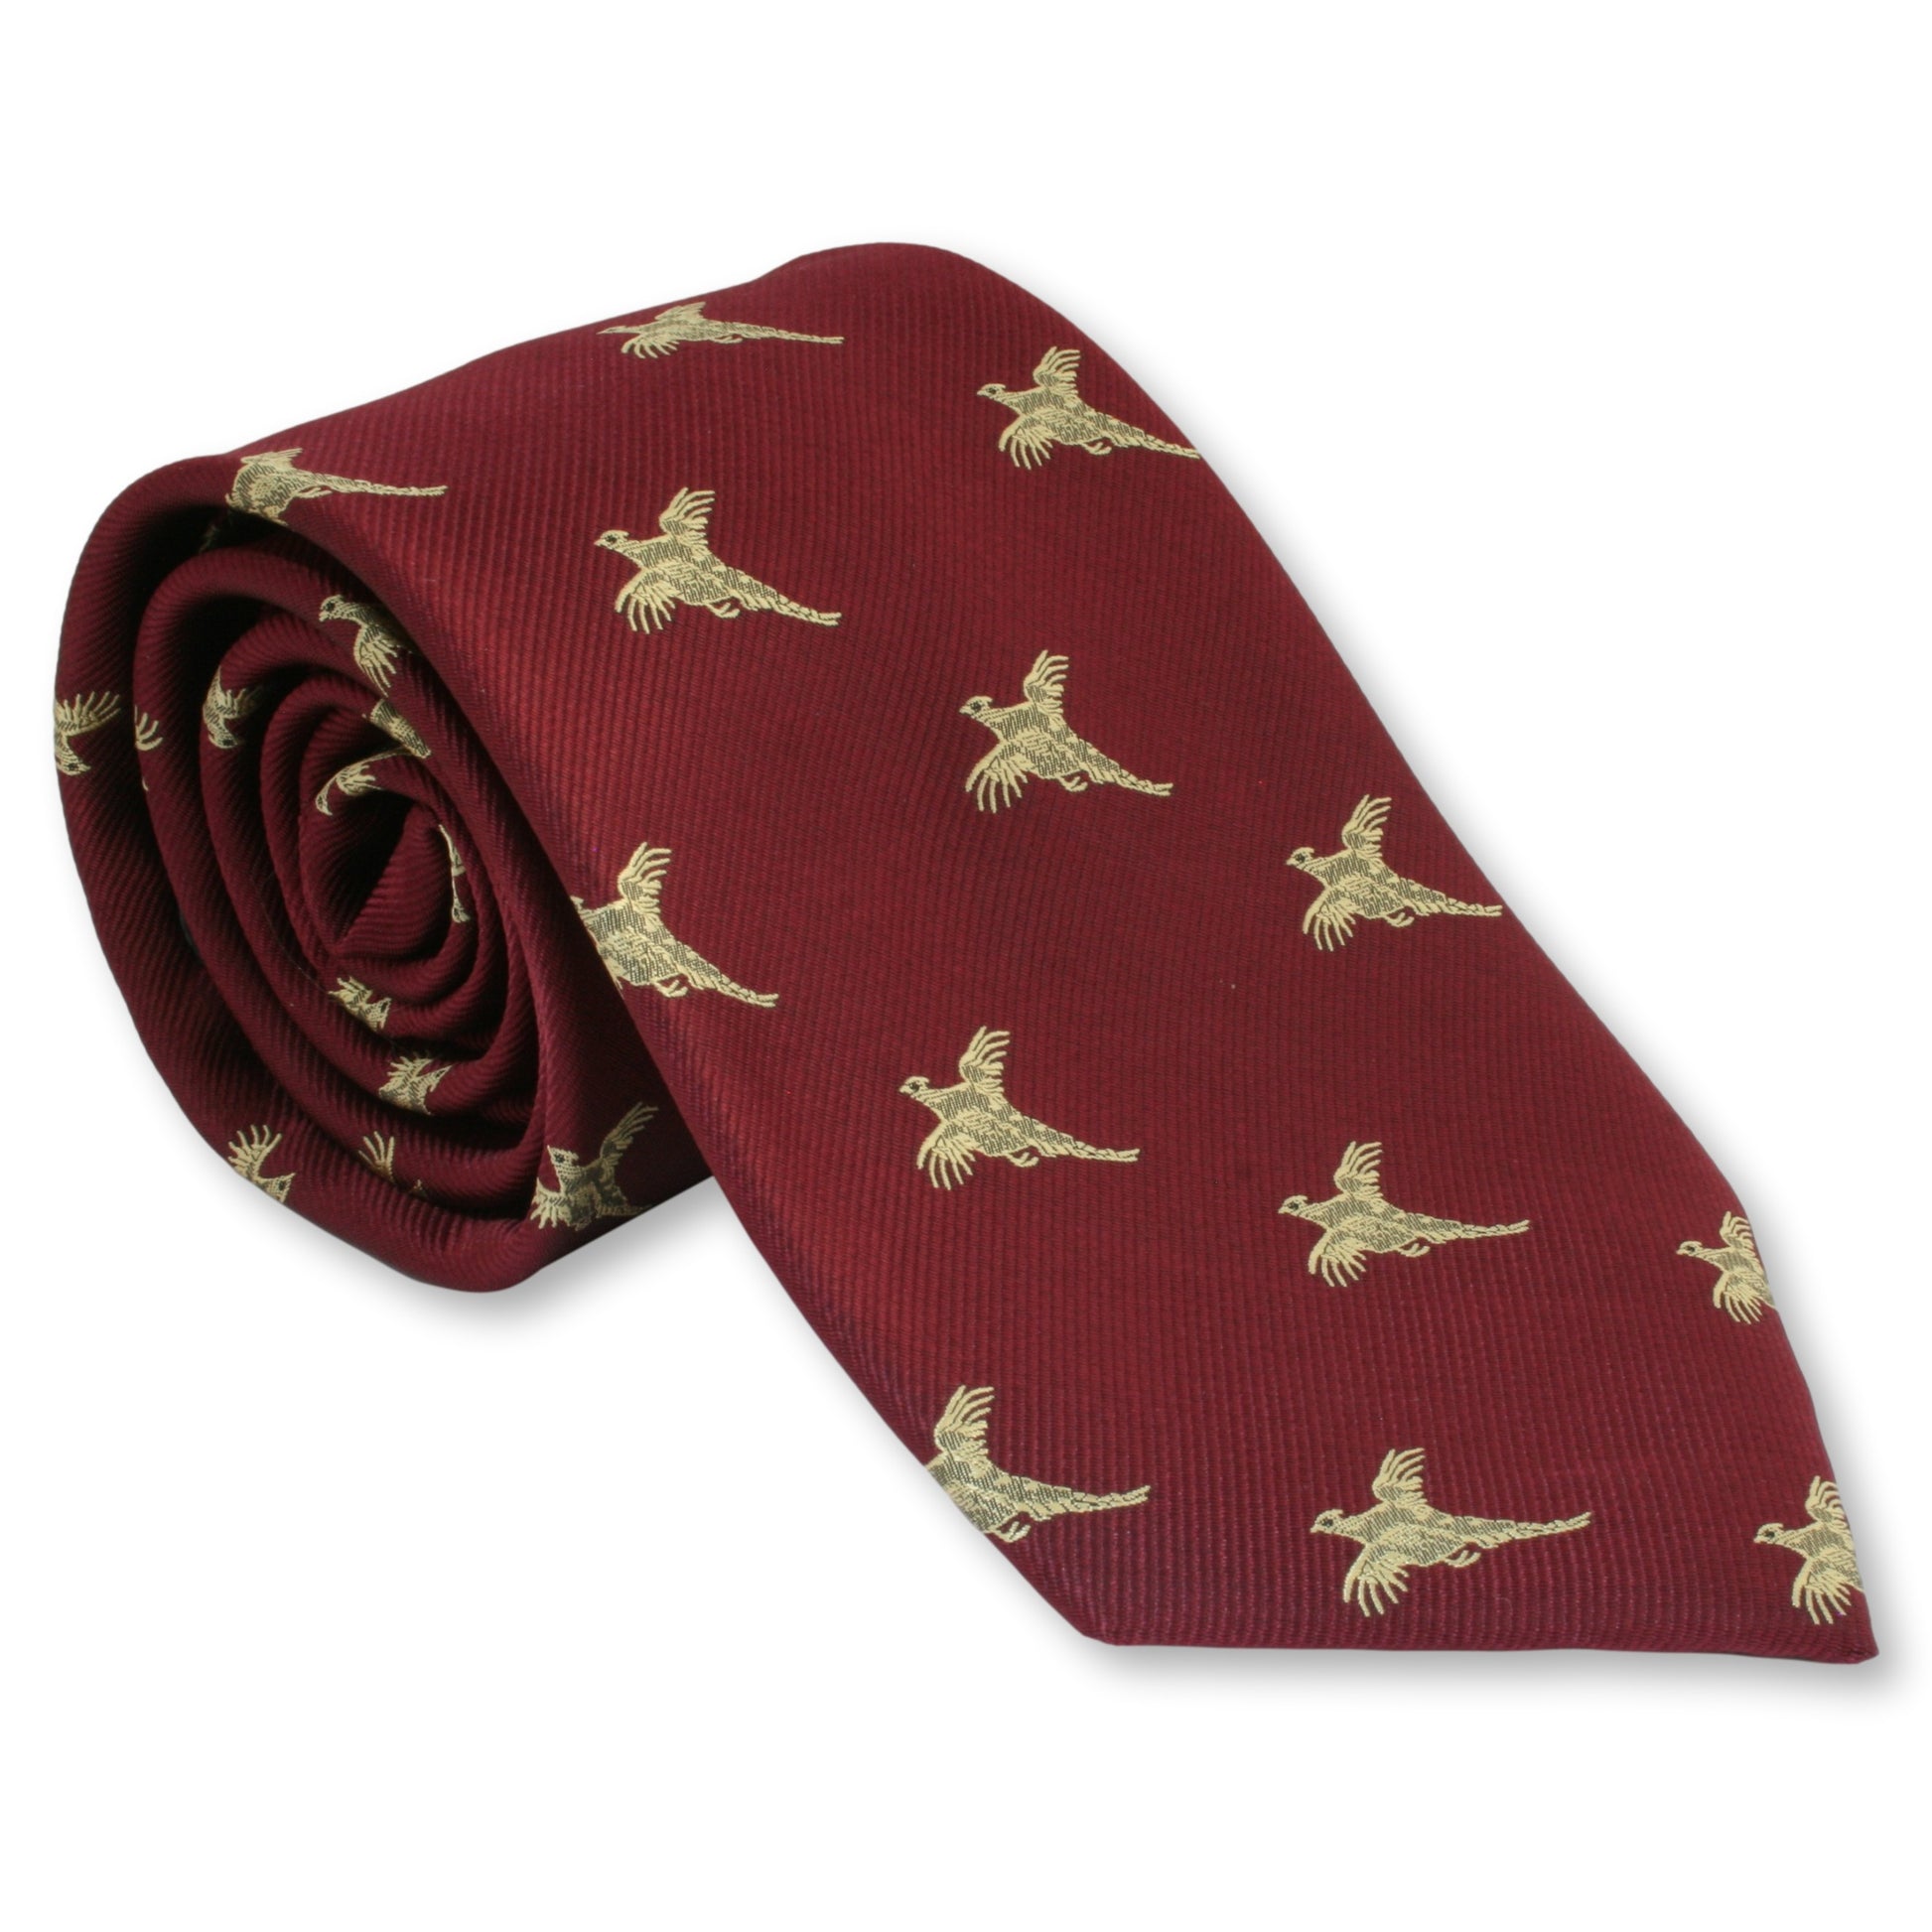 Red Pheasant Tie gamekeepers Cottage Gifts